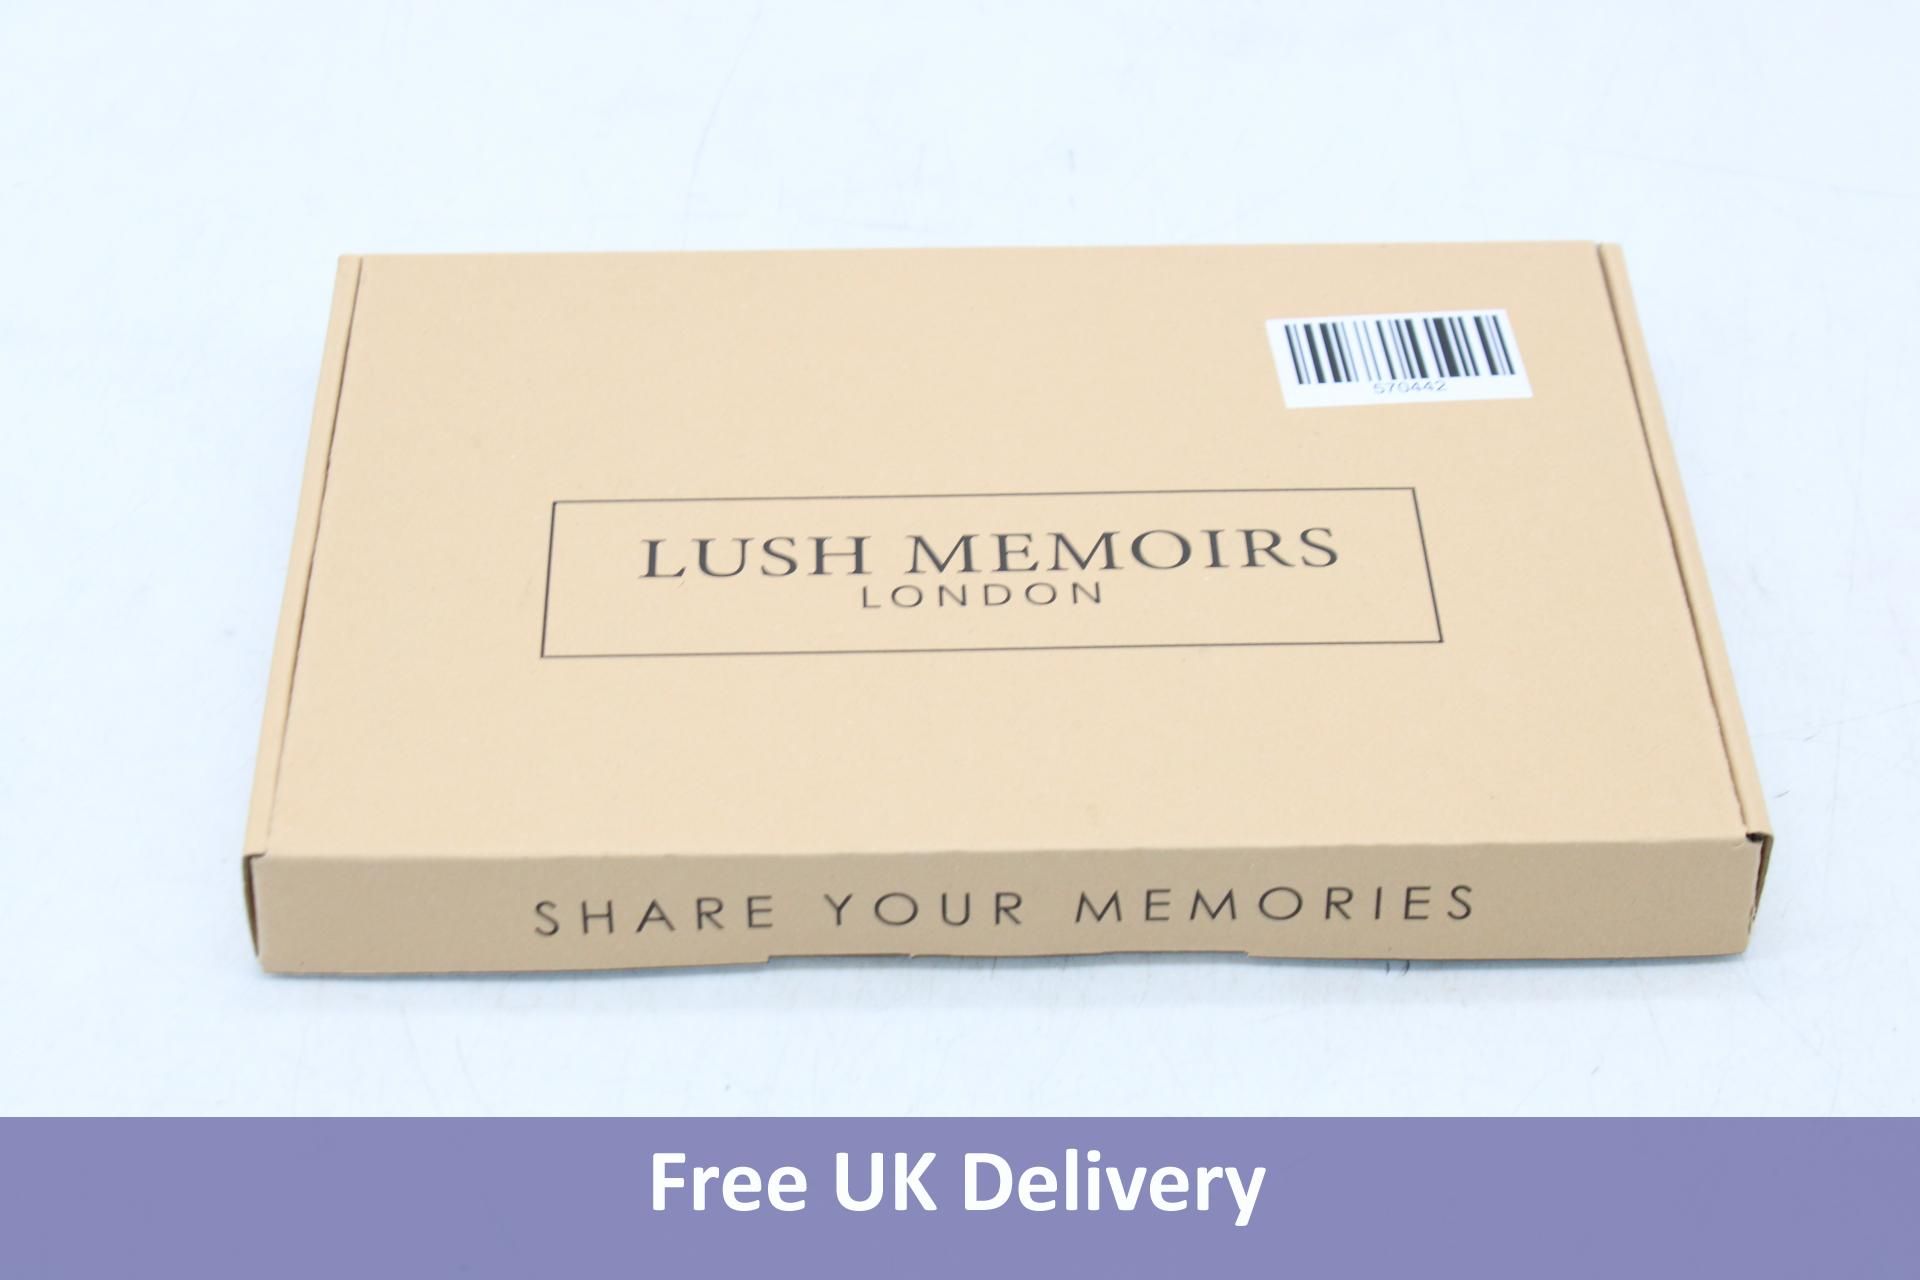 Ten Lush Memoirs London ''Our Wedding'' Video Albums - Image 2 of 10